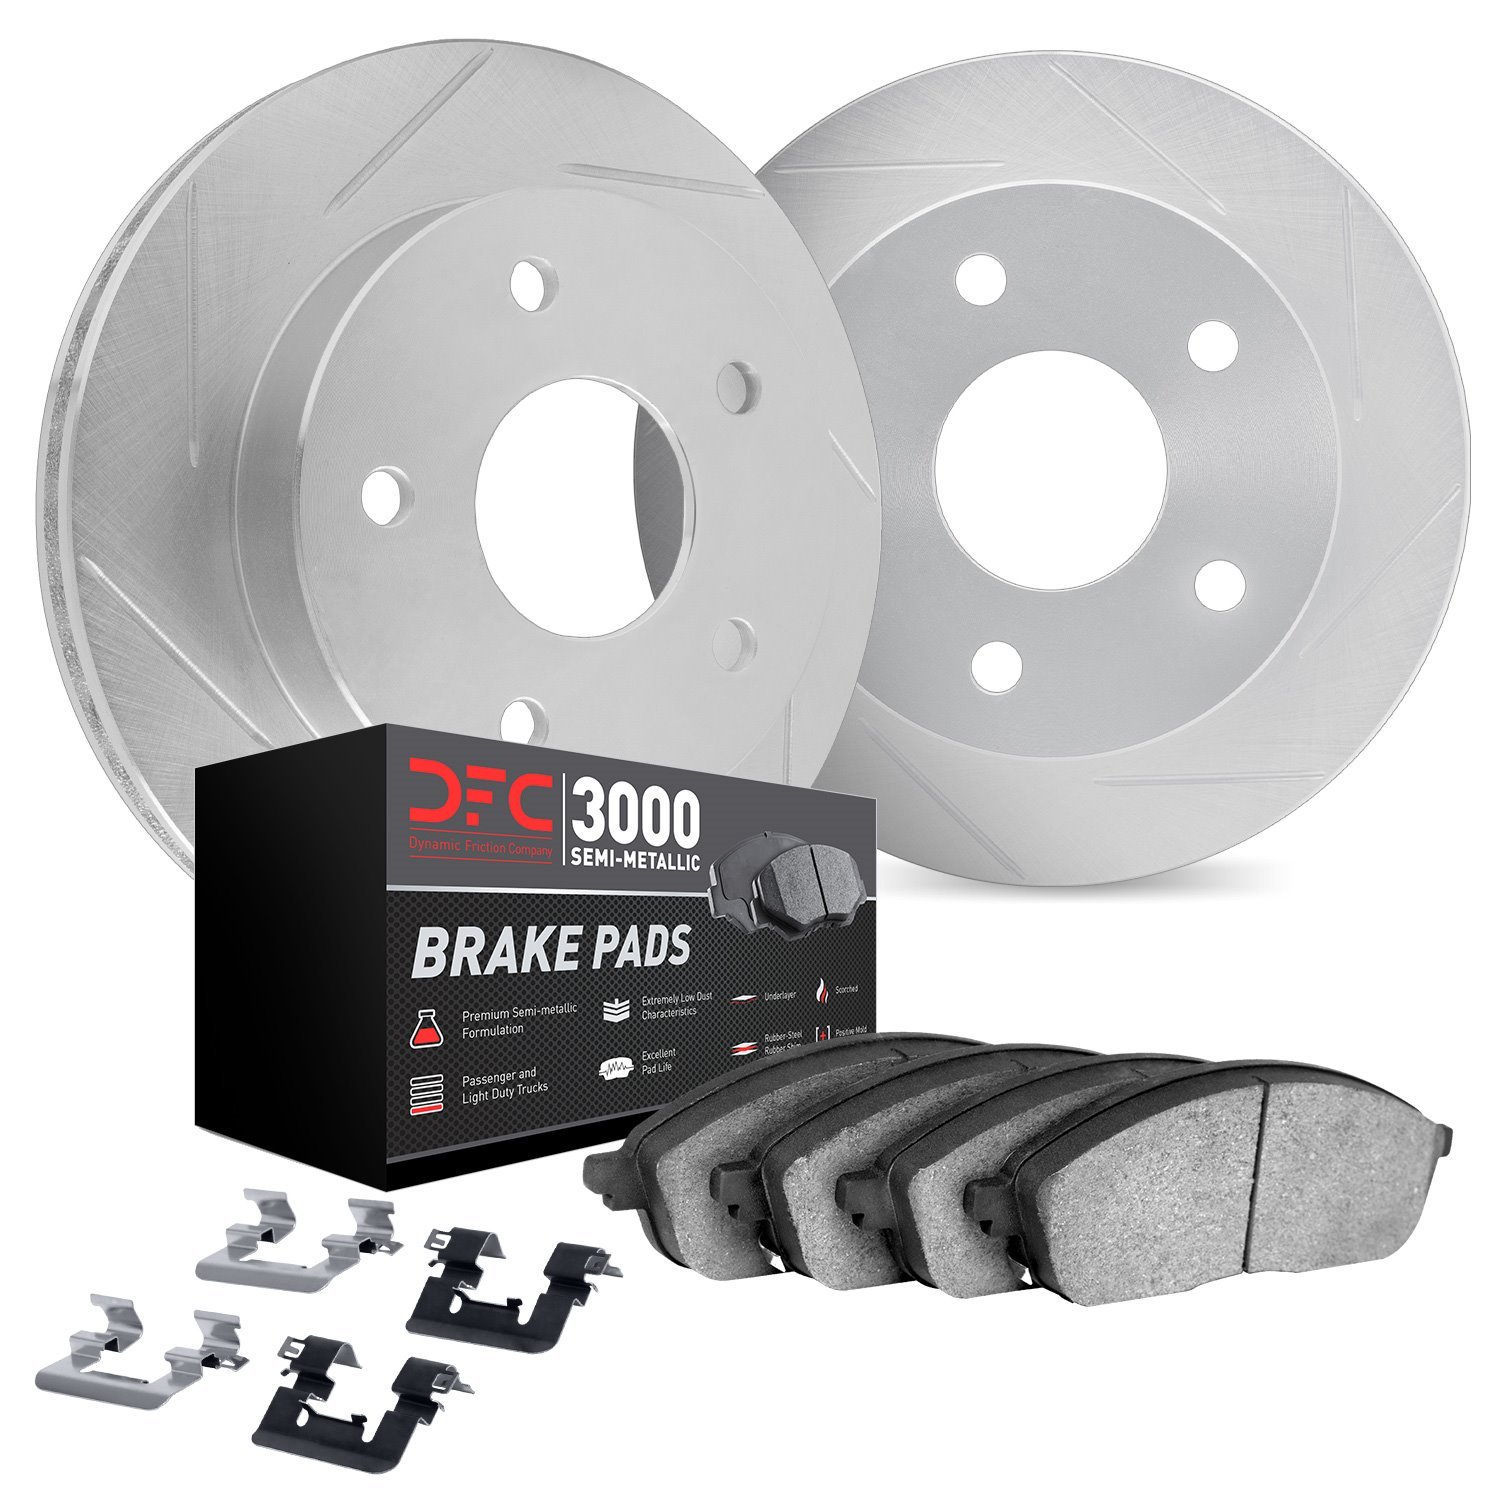 5112-40083 Slotted Brake Rotors with 3000-Series Semi-Metallic Brake Pads Kit & Hardware [Silver], 2002-2018 Mopar, Position: Re